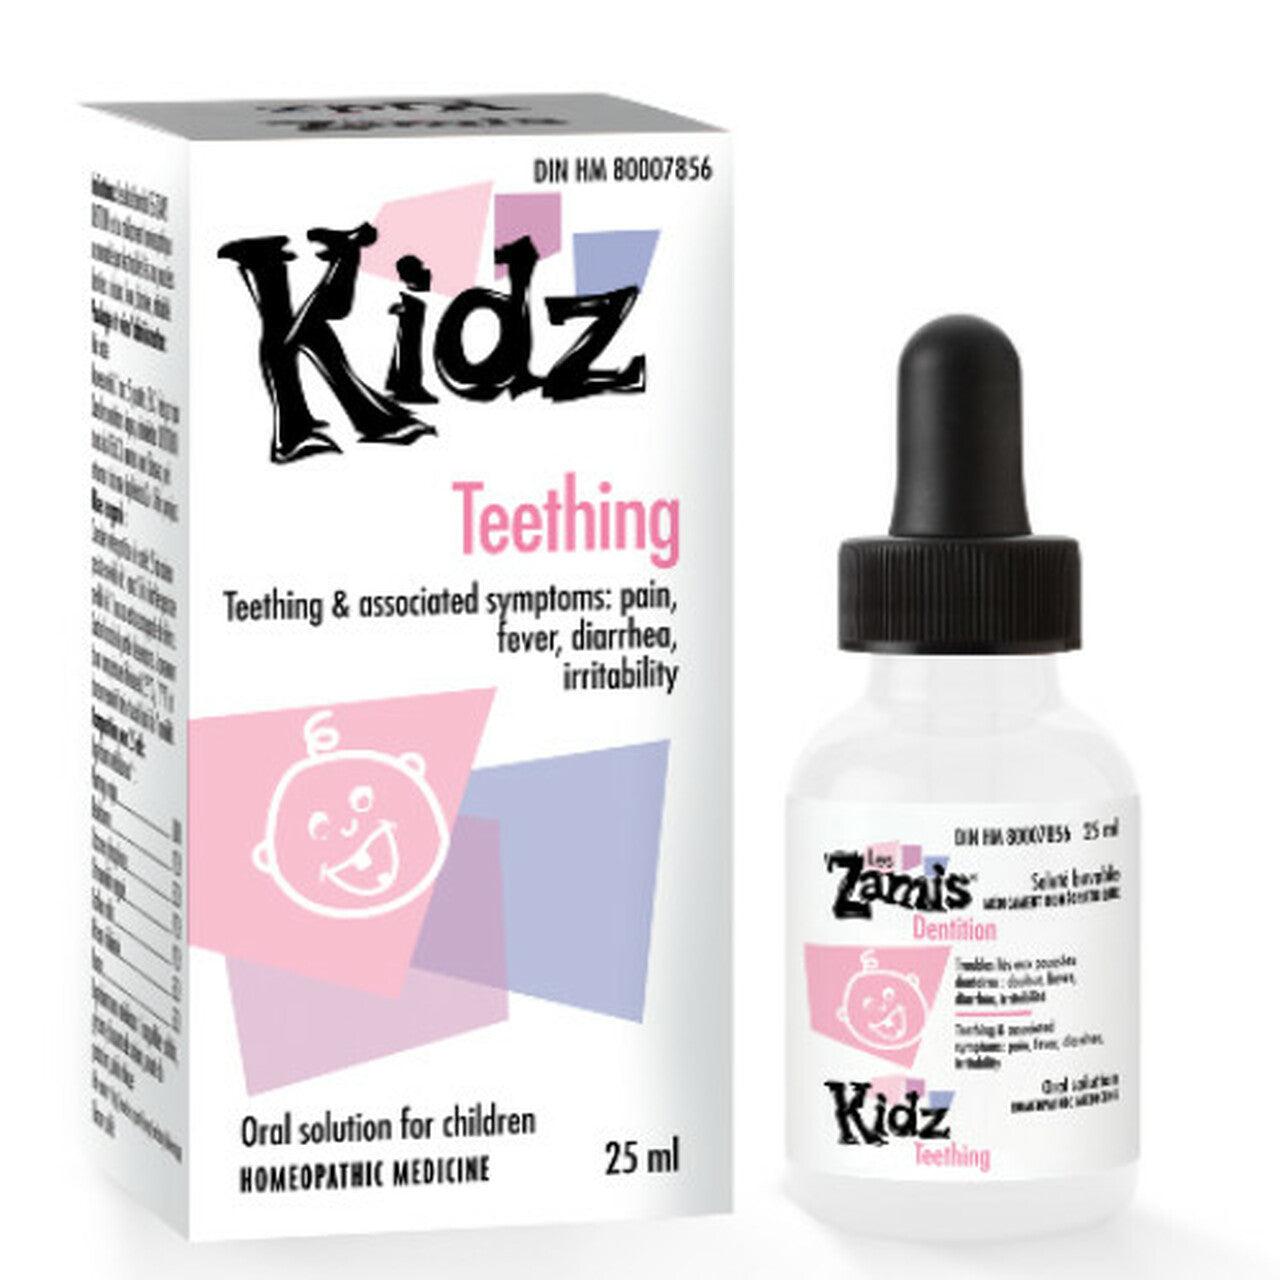 Kidz Teething 25 ML Homeopathic at Village Vitamin Store